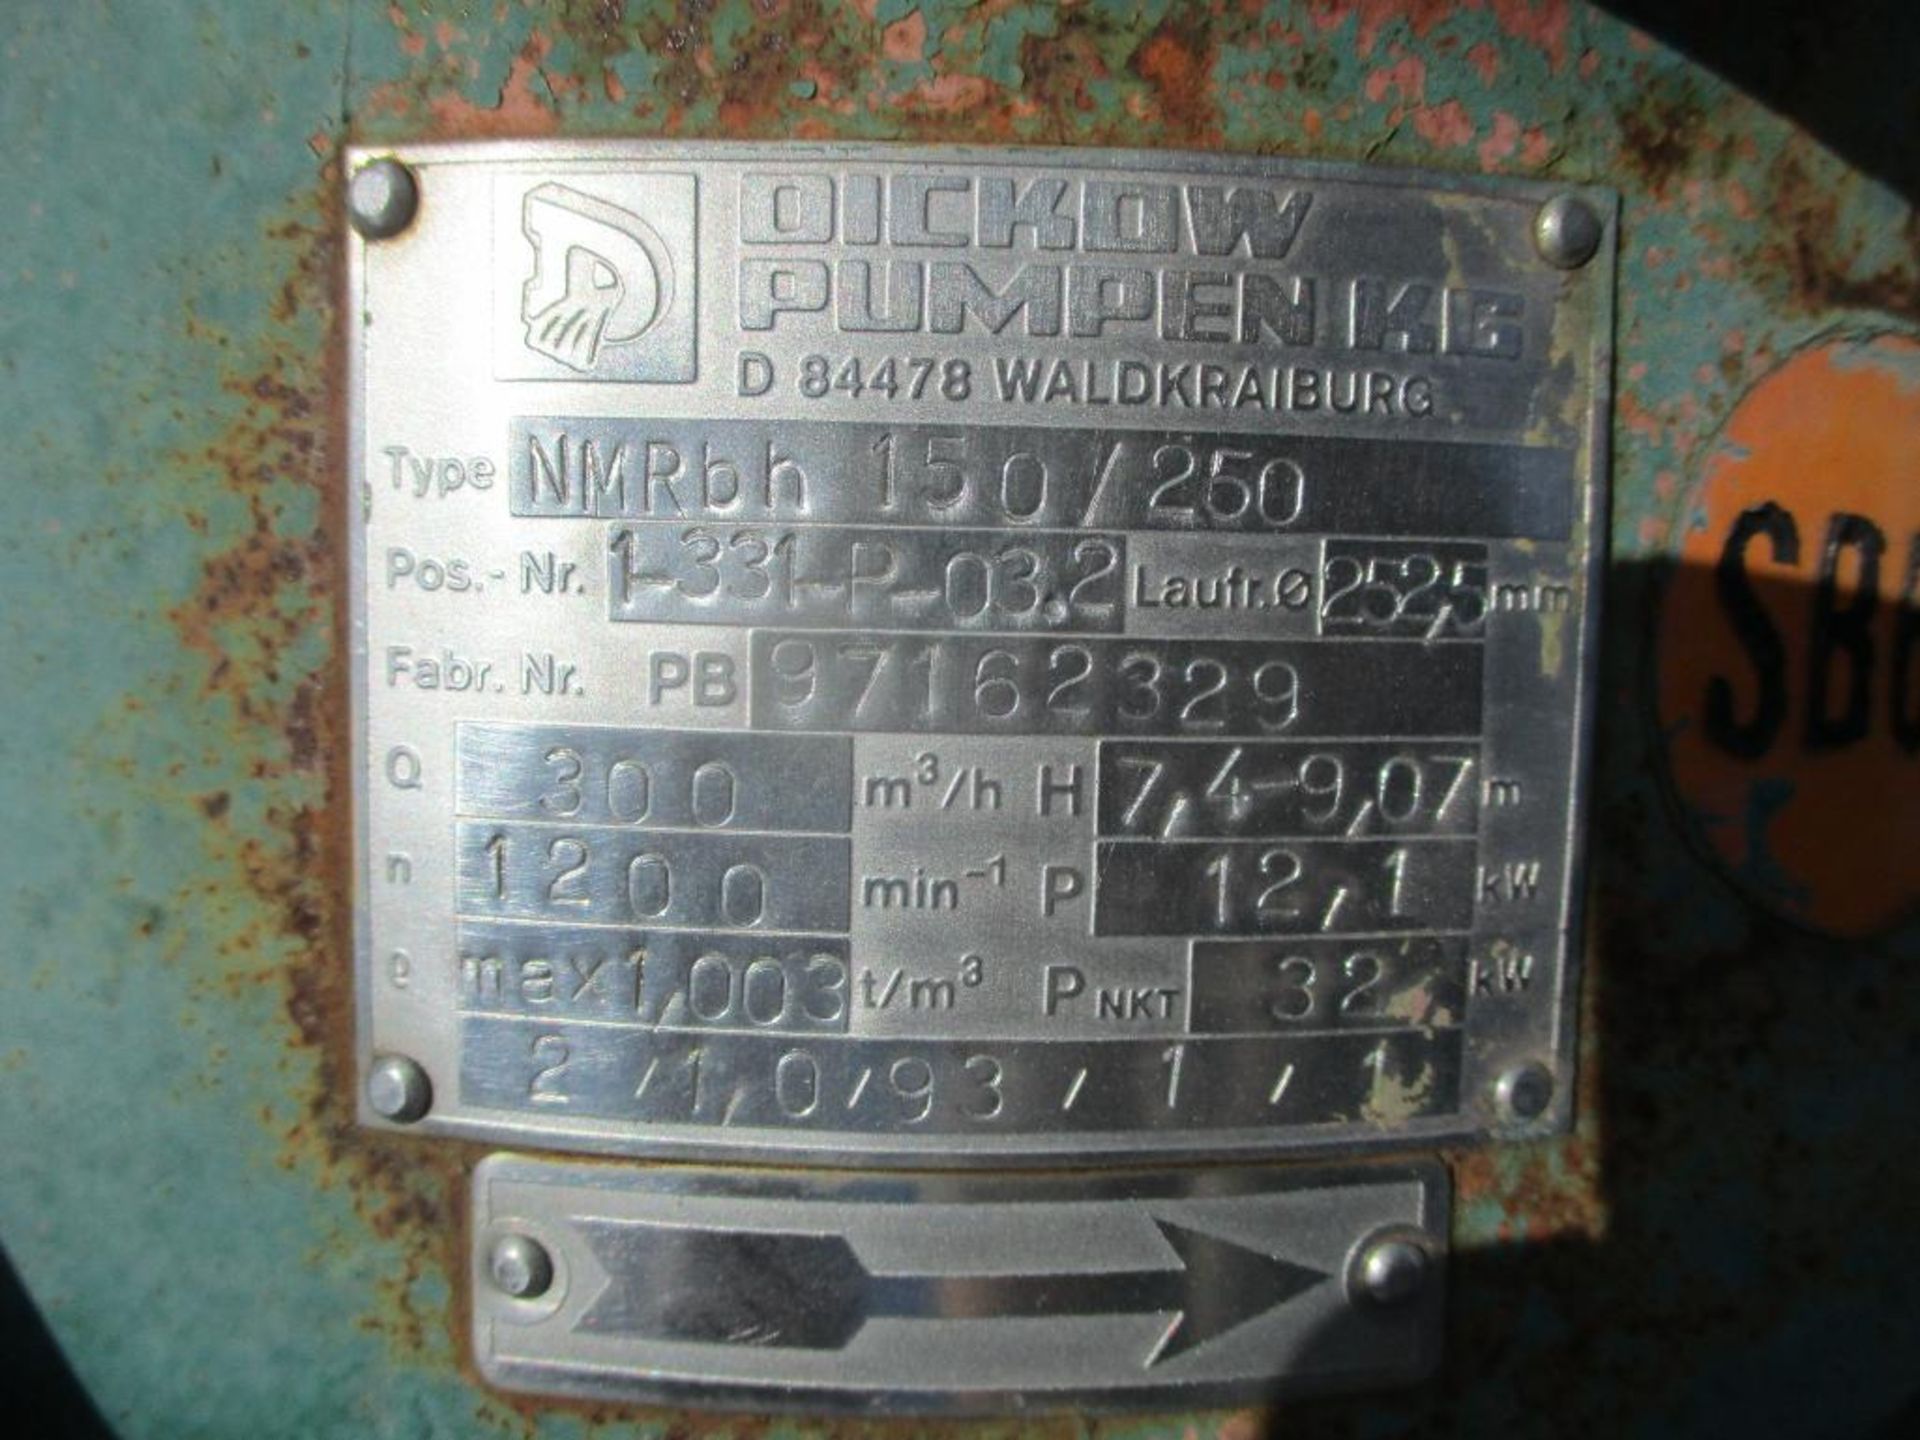 Dickow Pump, Type NMR6H, 150/250, 18 KW Motor - Image 4 of 4